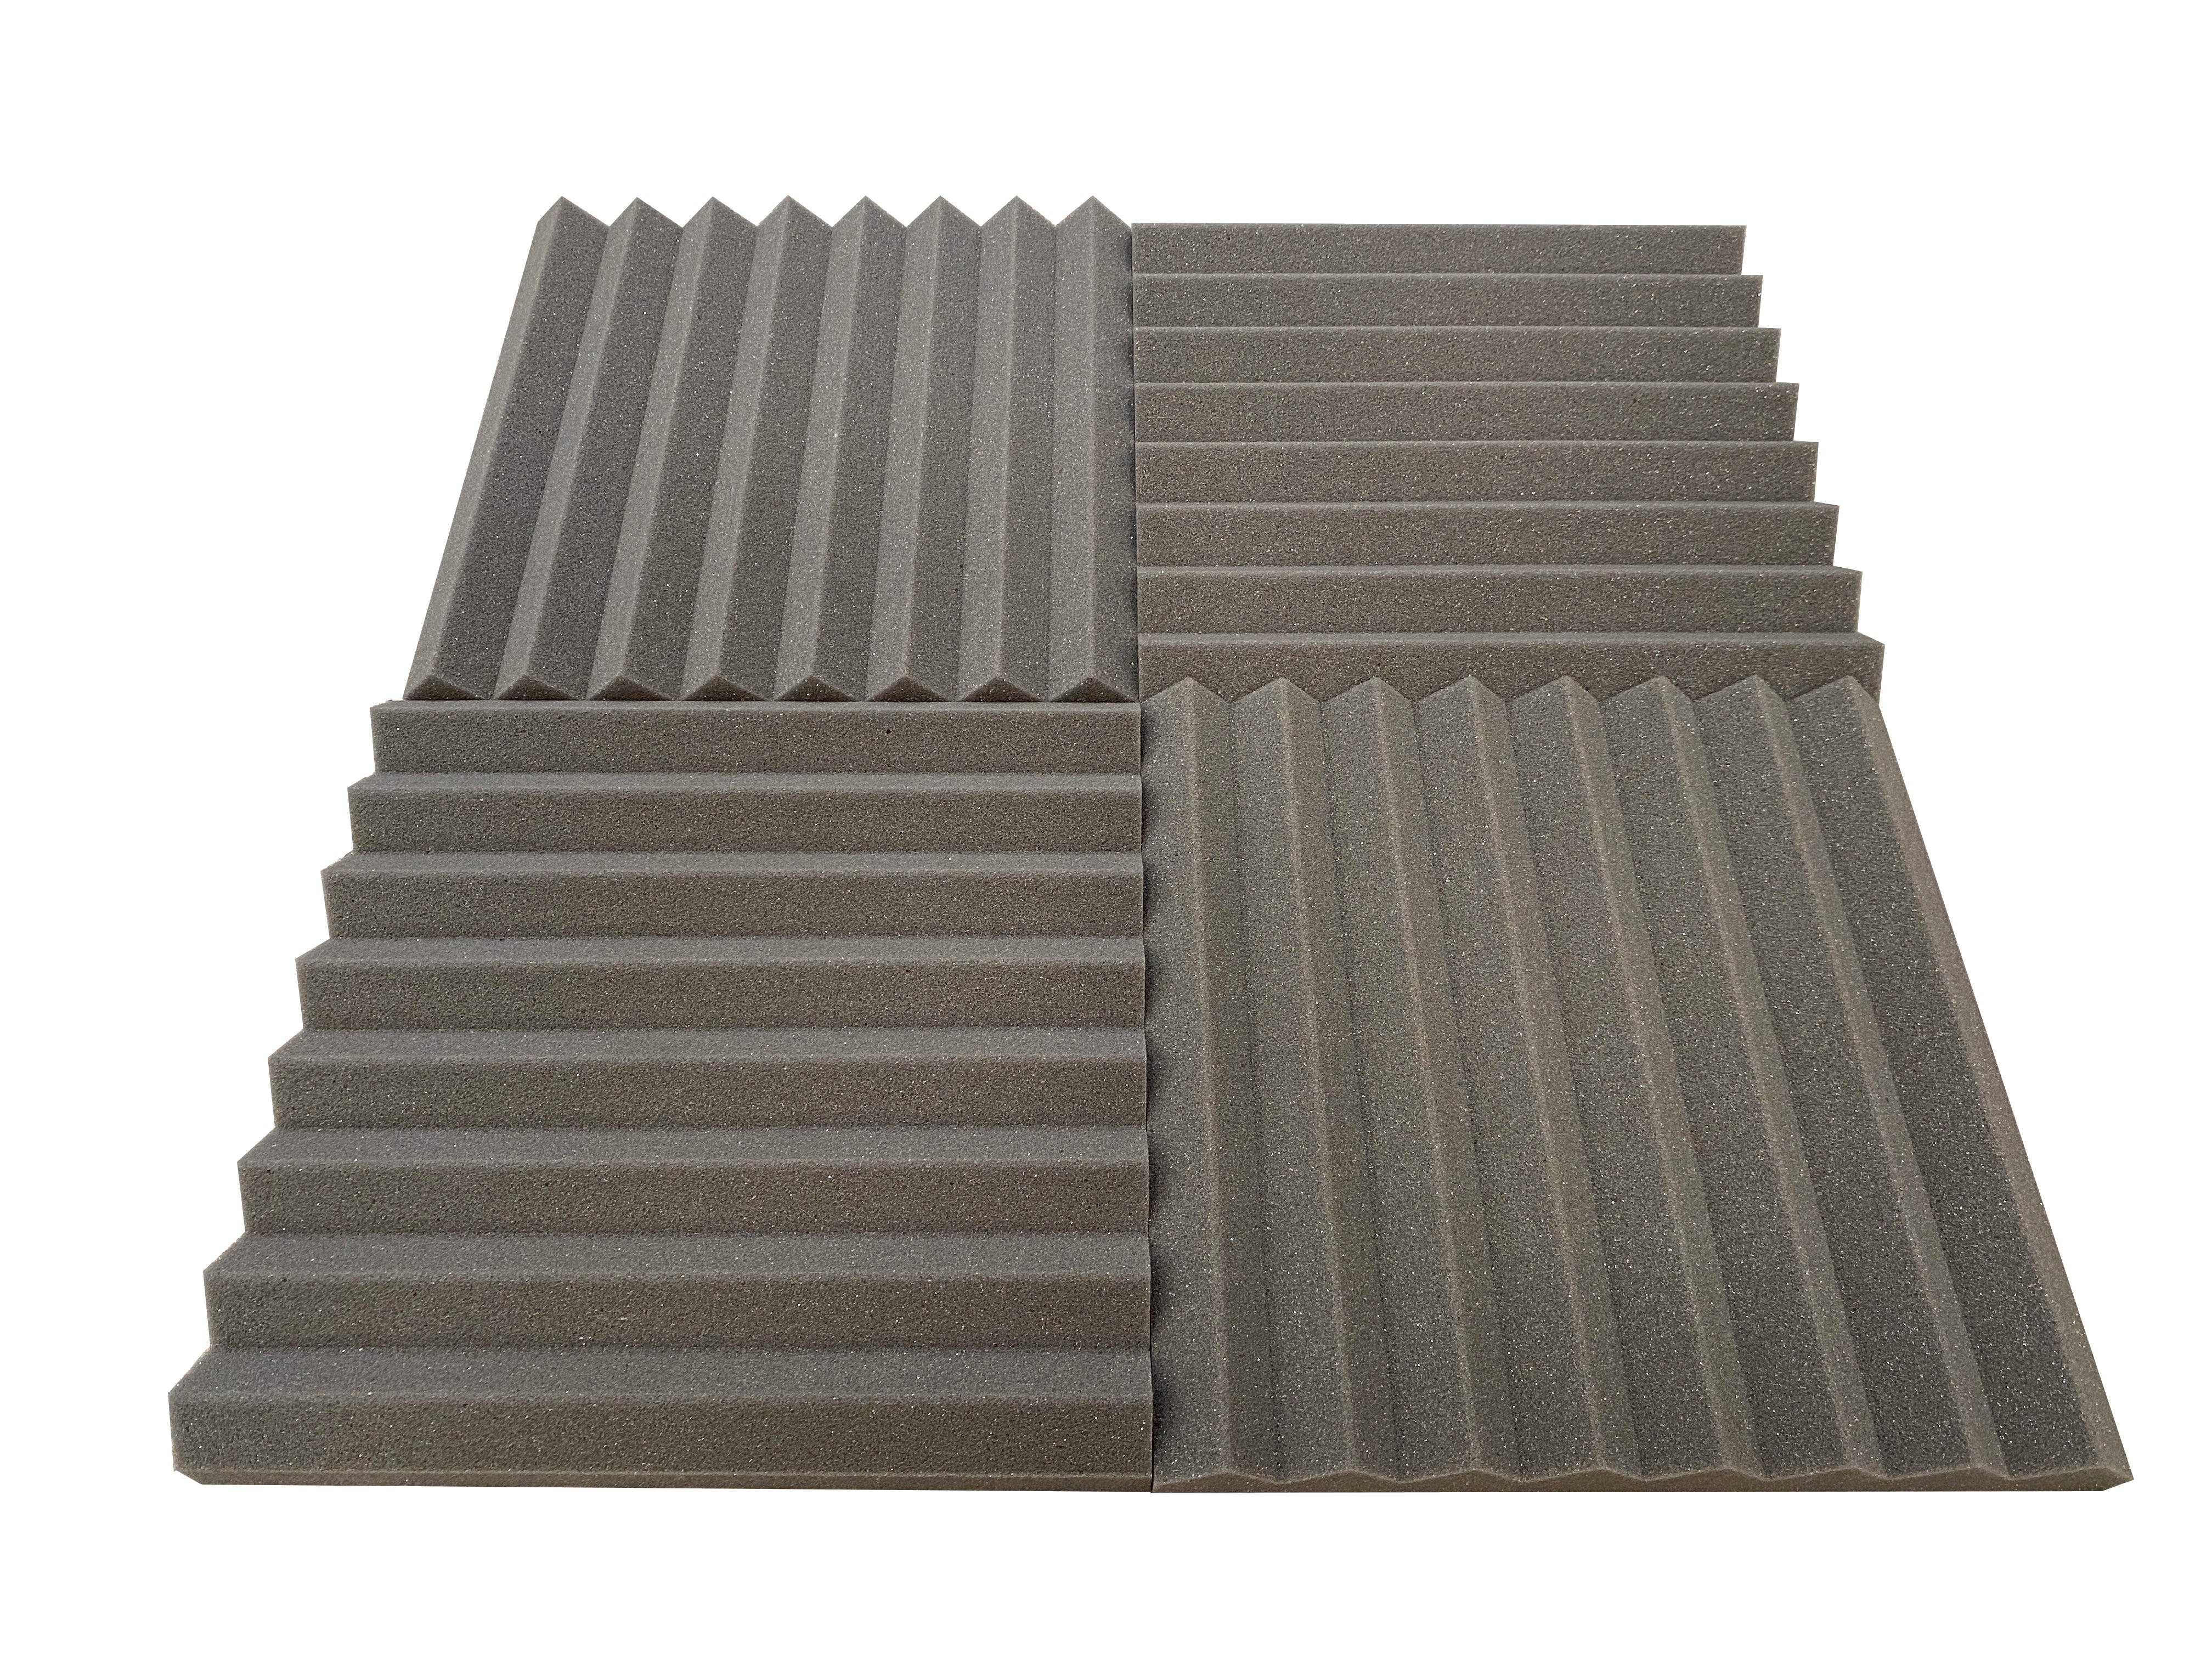 Wedge 12" Acoustic Studio Foam Tile Pack - 24 Tiles, 2.2qm Coverage-5